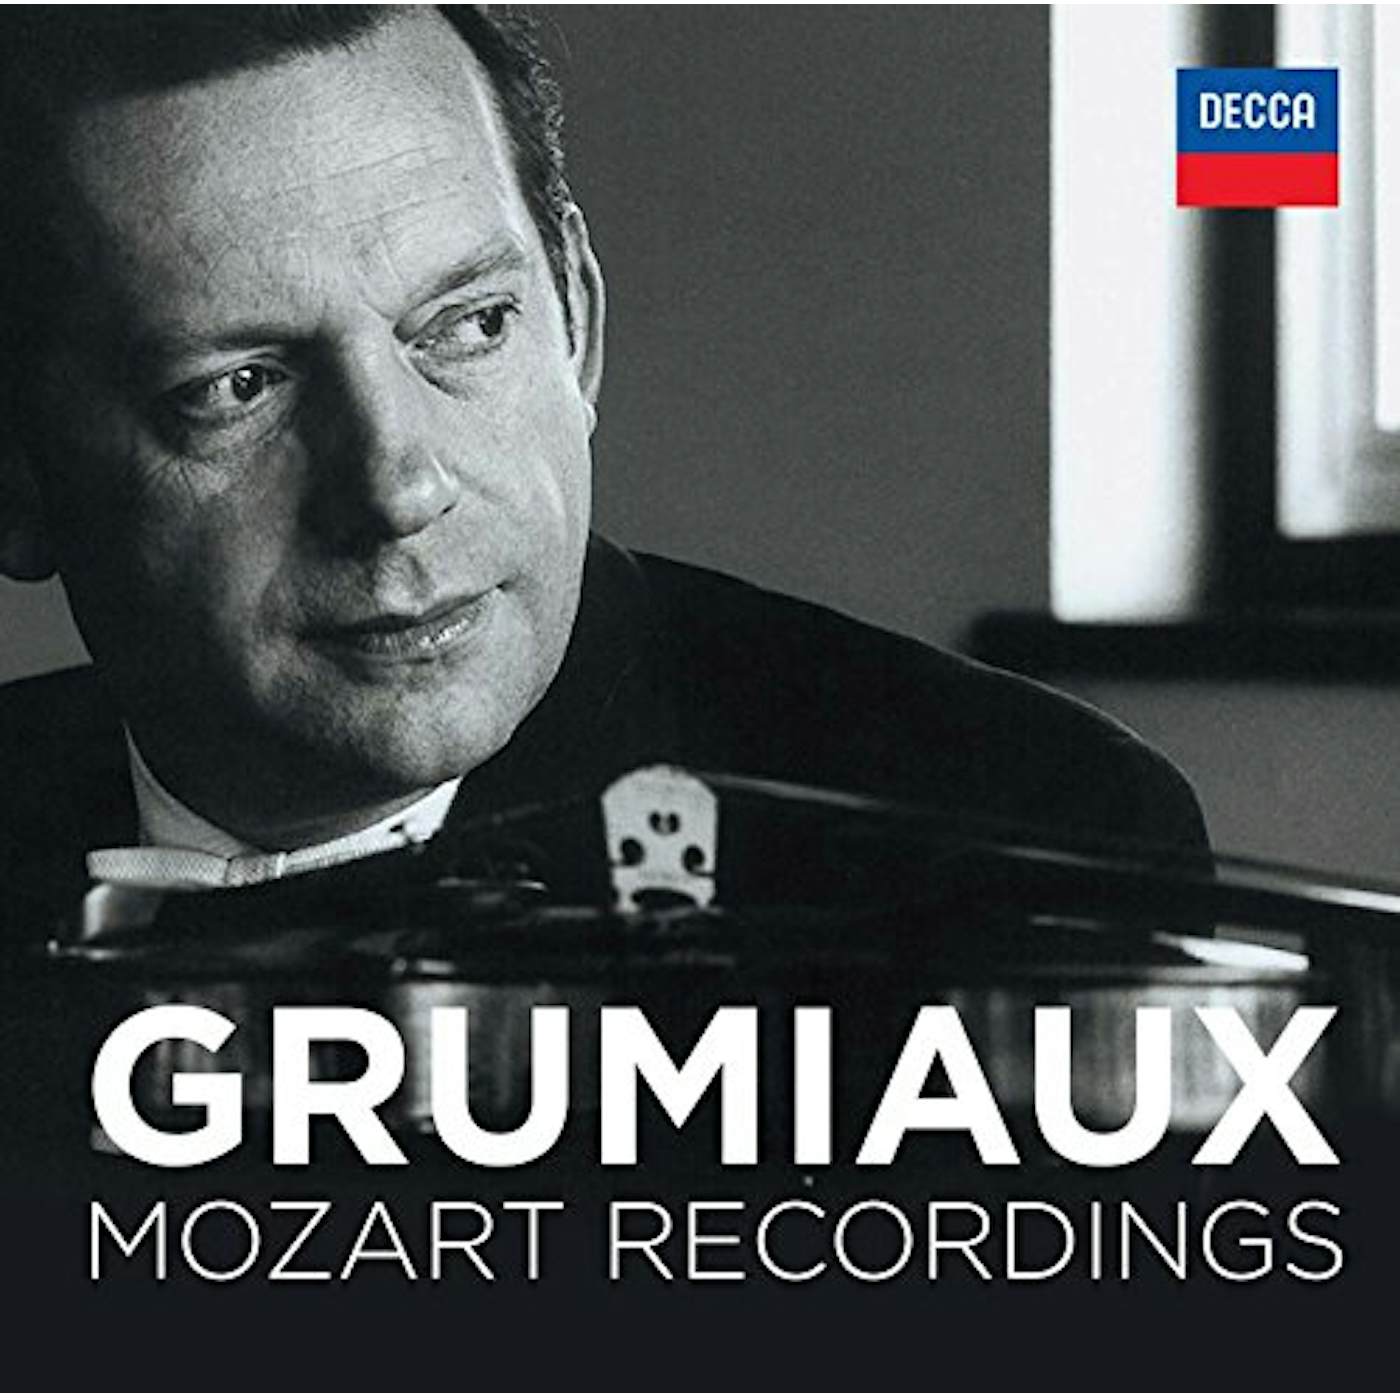 Arthur Grumiaux MOZART RECORDINGS CD